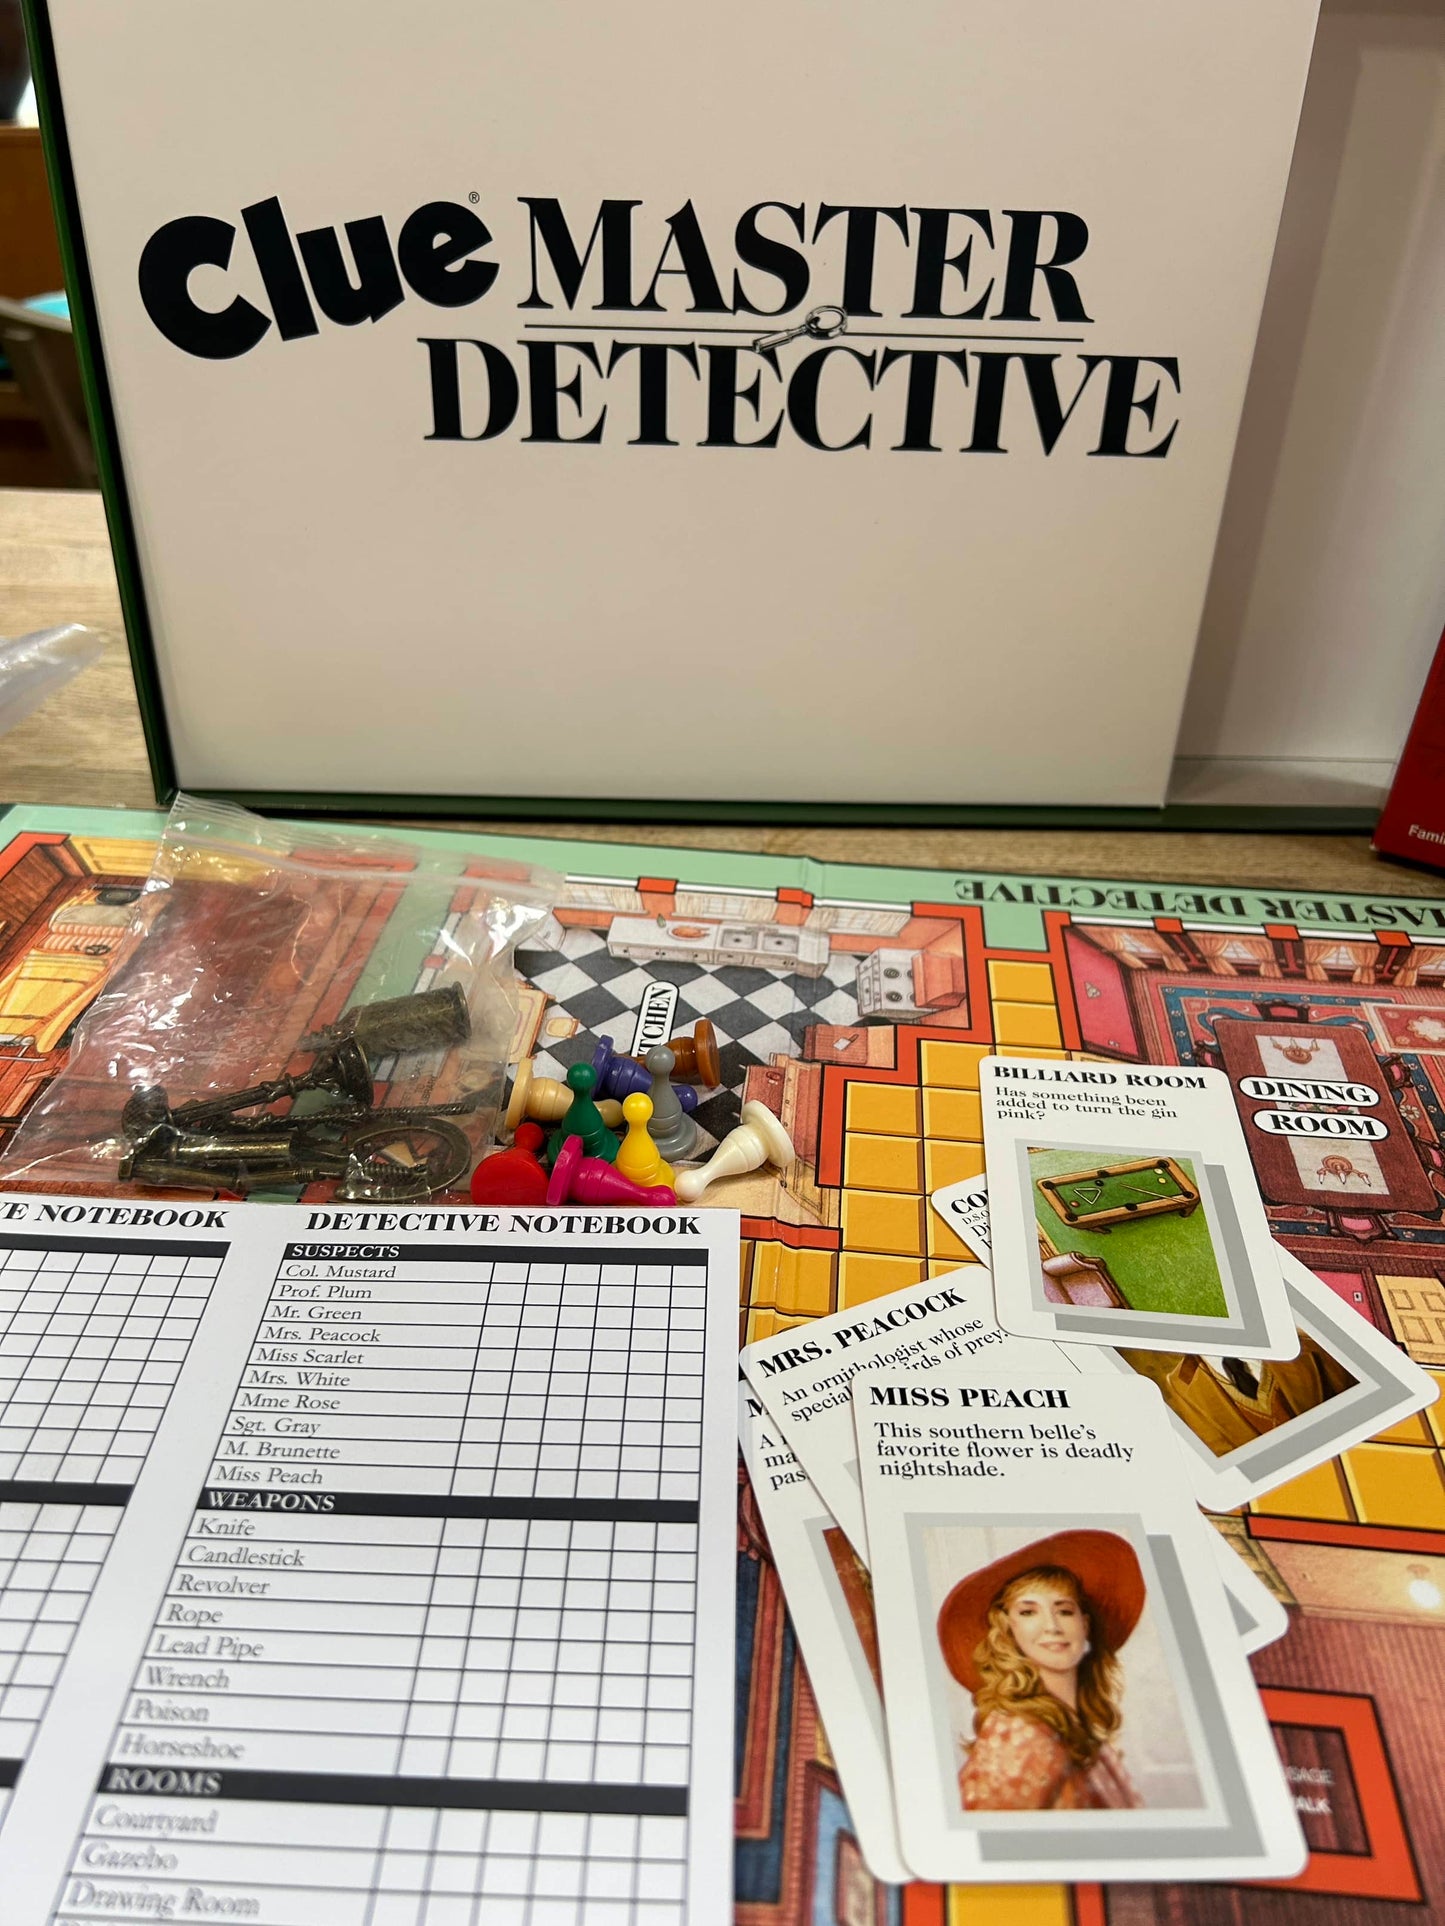 Clue Master Detective - Hasbro Game